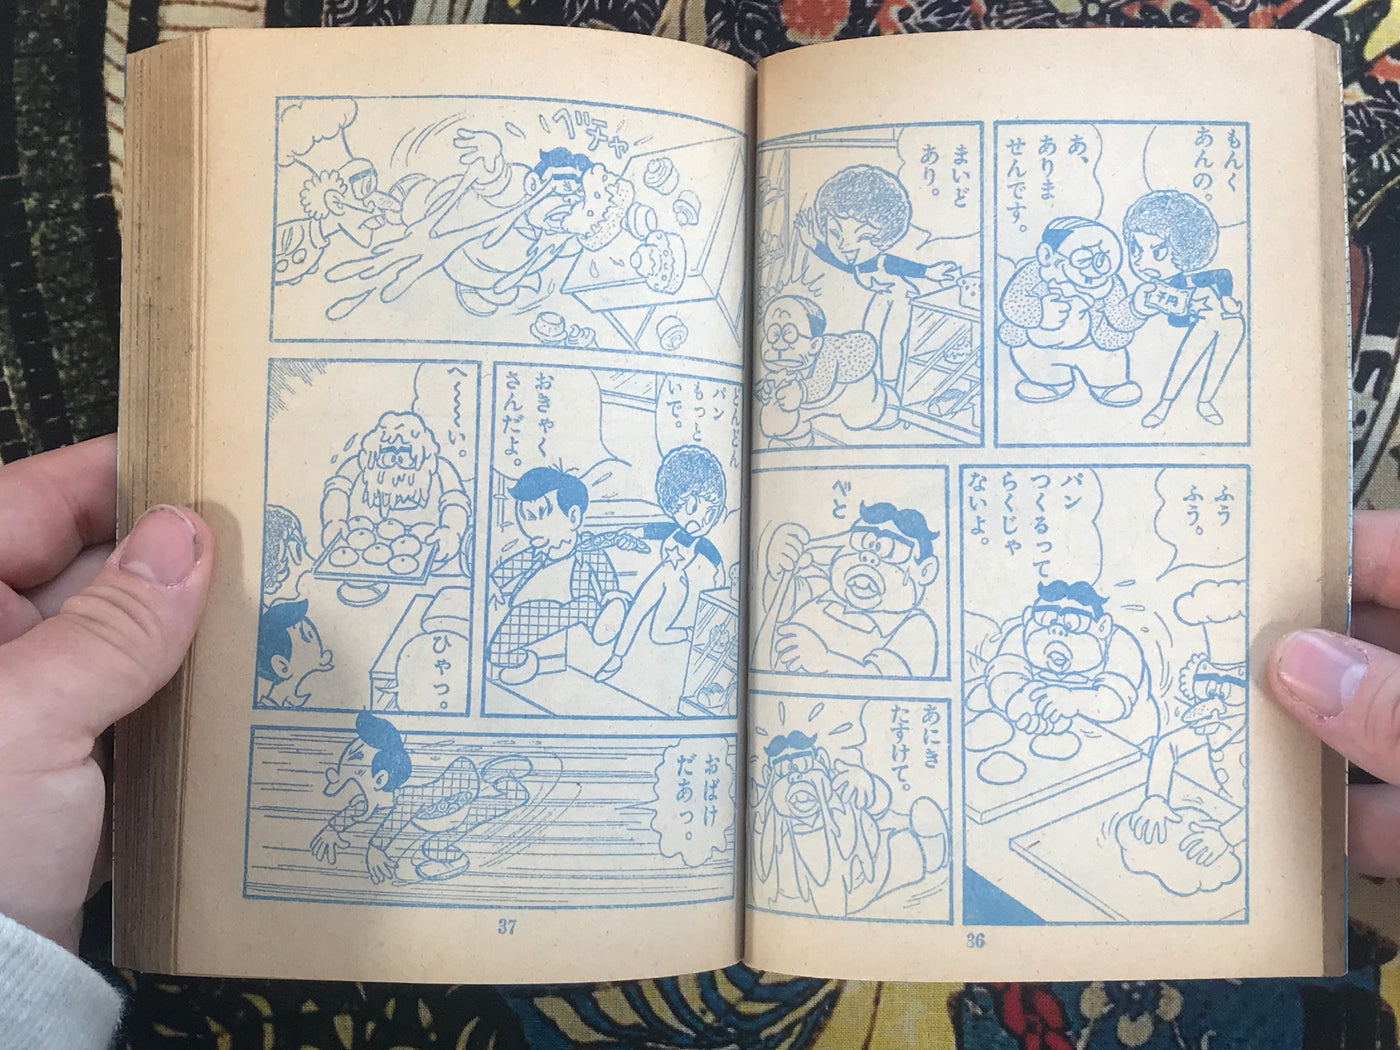 Televi-kun Magazine furoku edition with Doraemon, Yatterman, Aztekaiser and Berorin (1977)